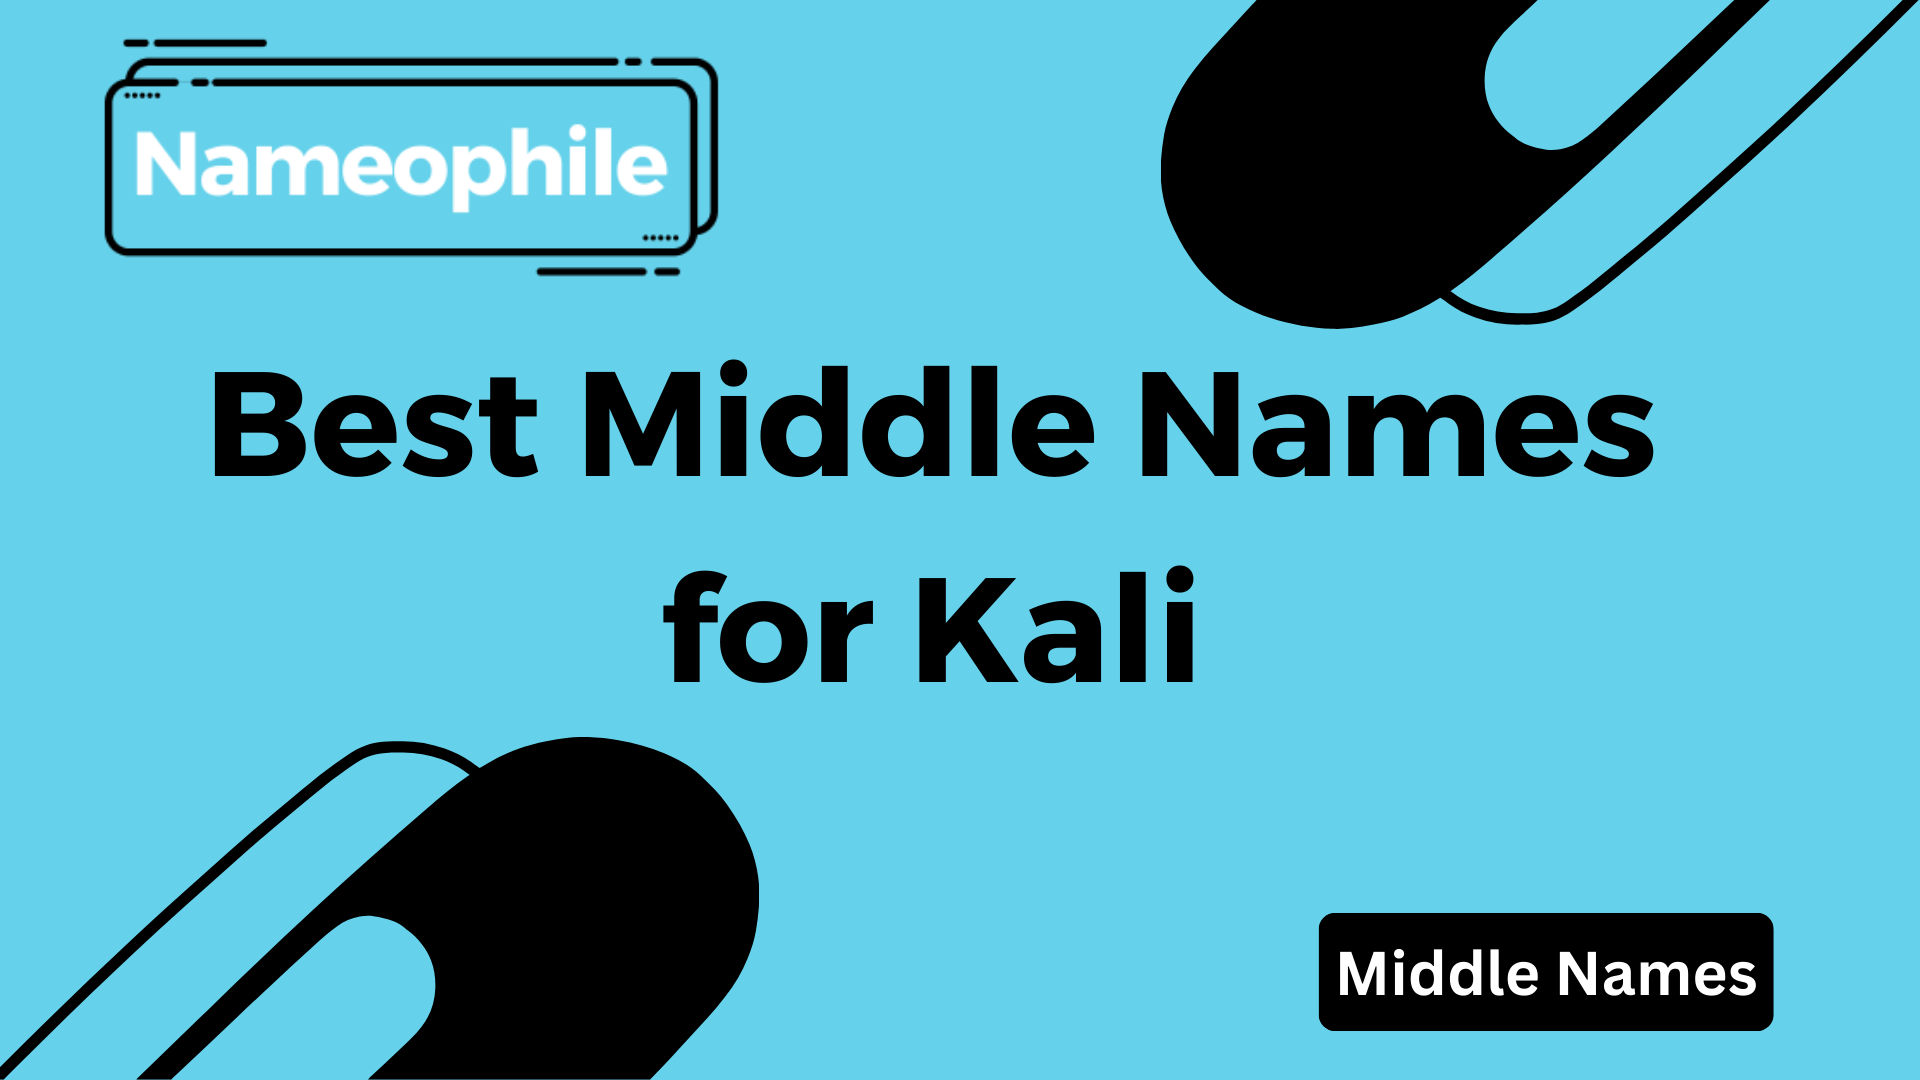 Best Middle Names for Kali